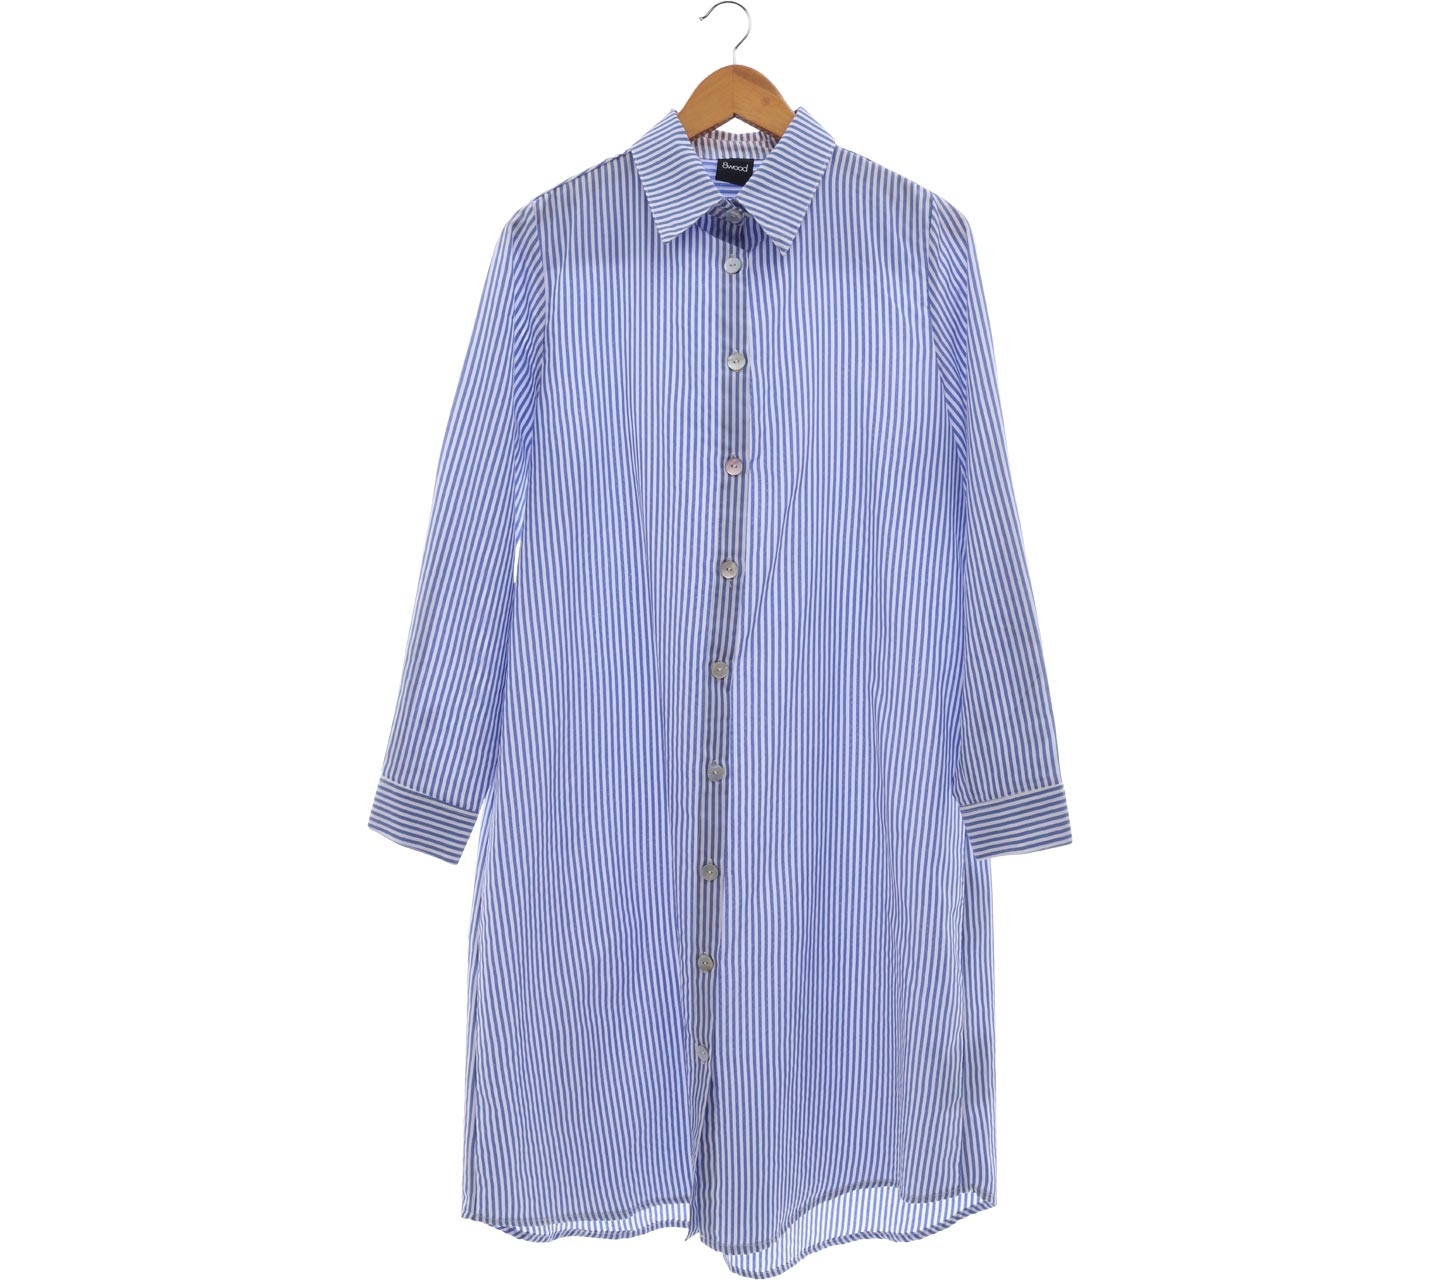 8wood Blue & White Striped Dress Shirt